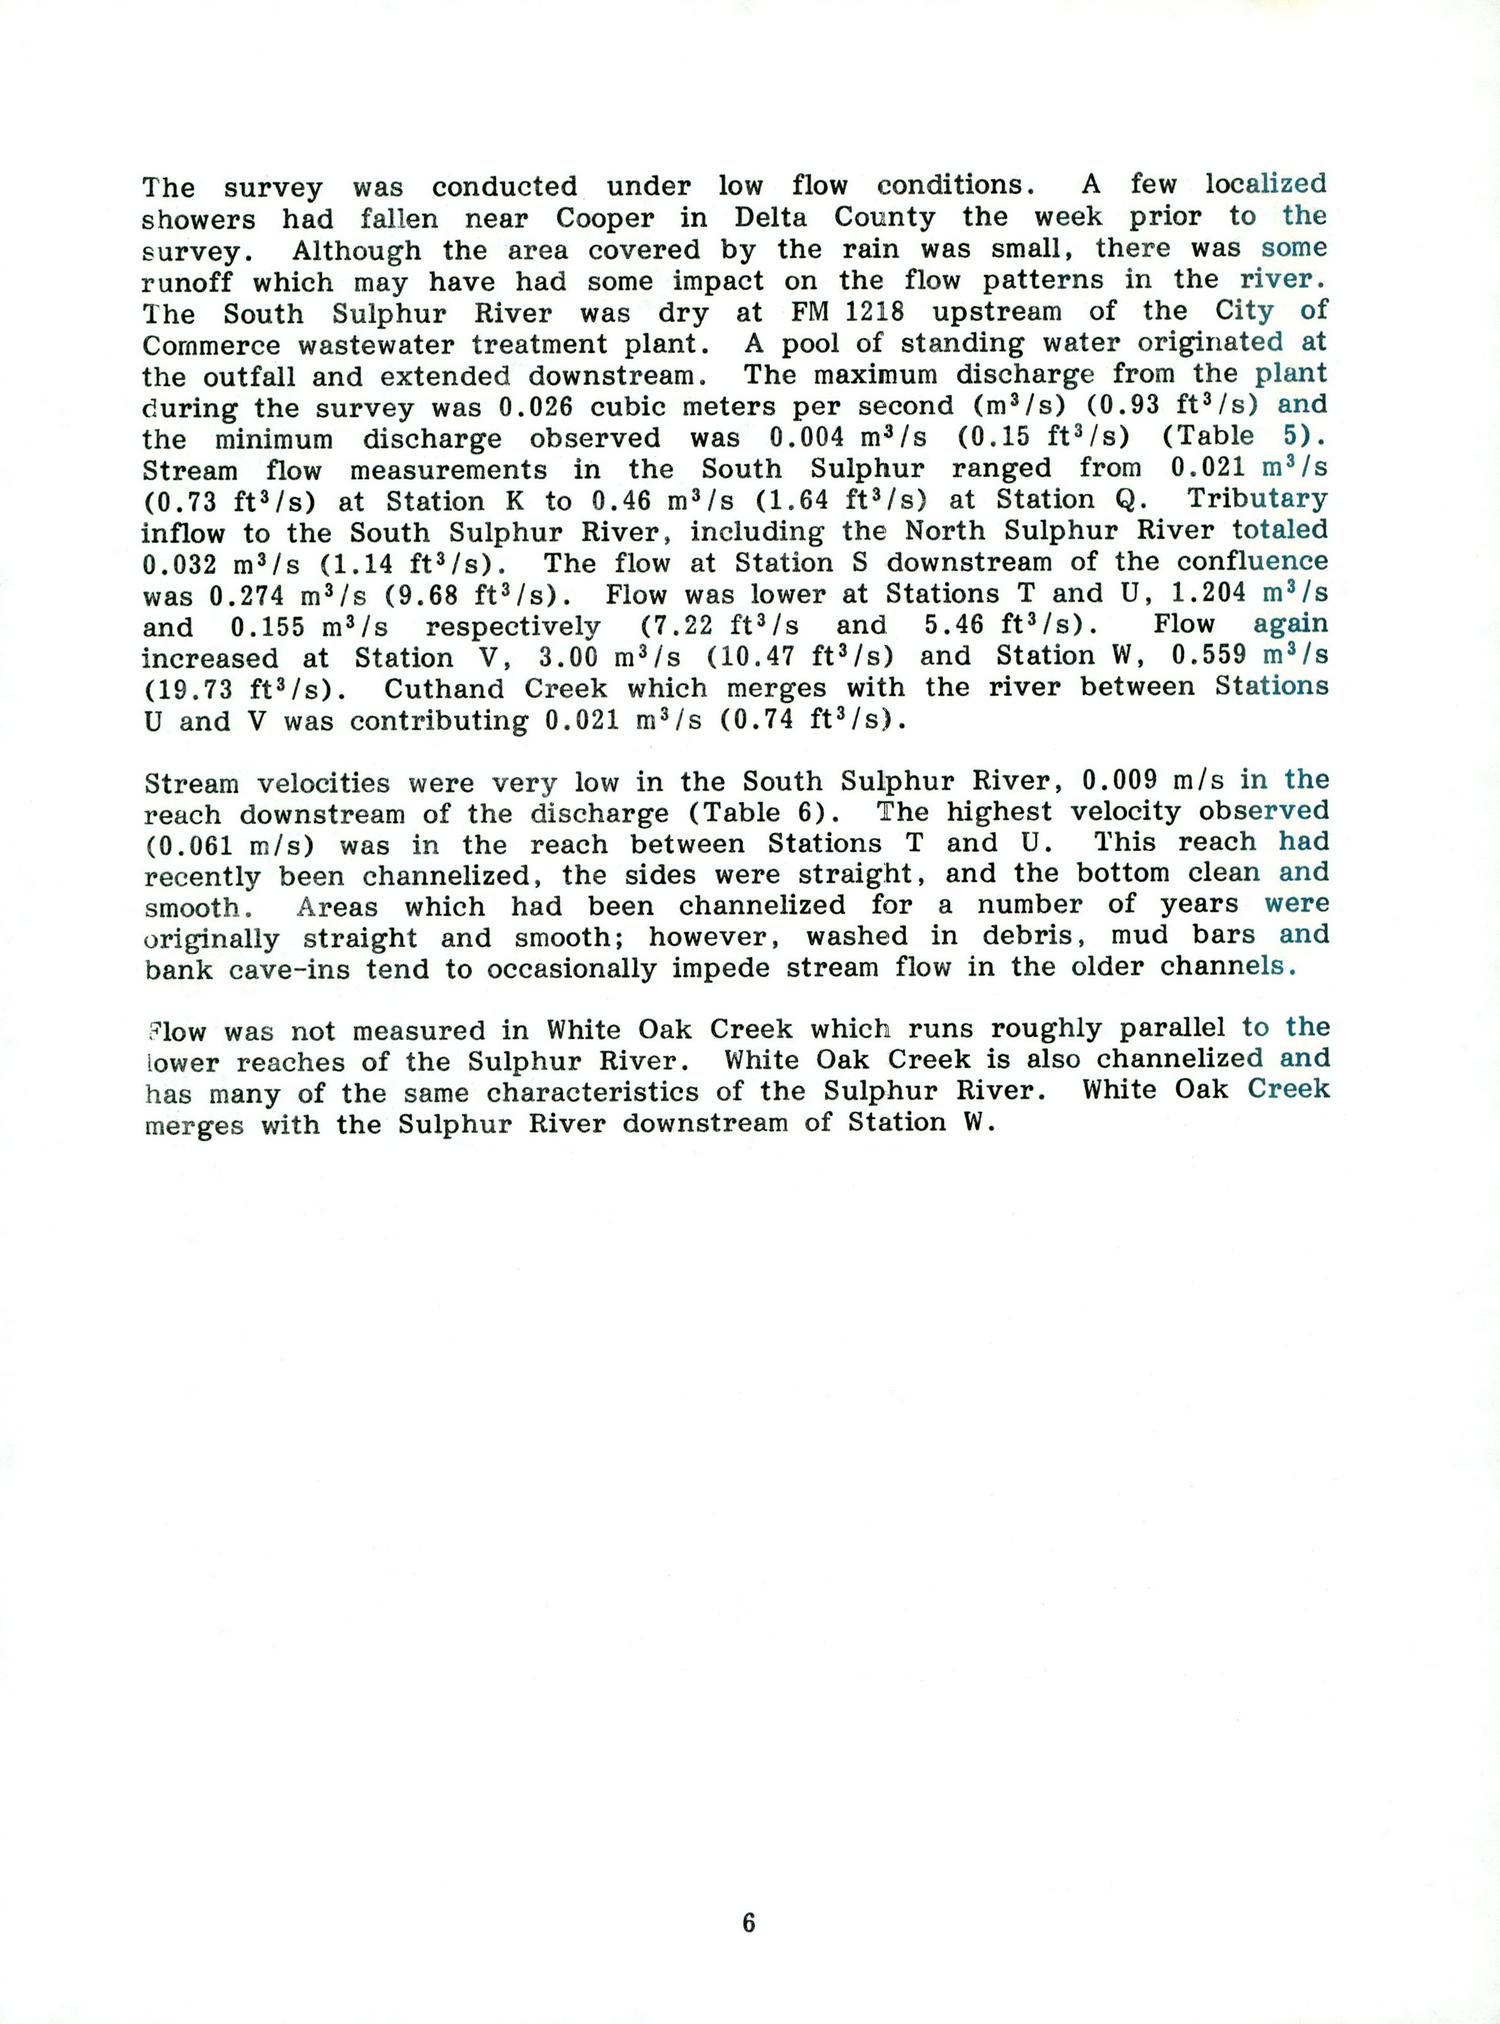 Intensive Survey of Sulphur River Segment 0303: August 13-17, 1984
                                                
                                                    6
                                                